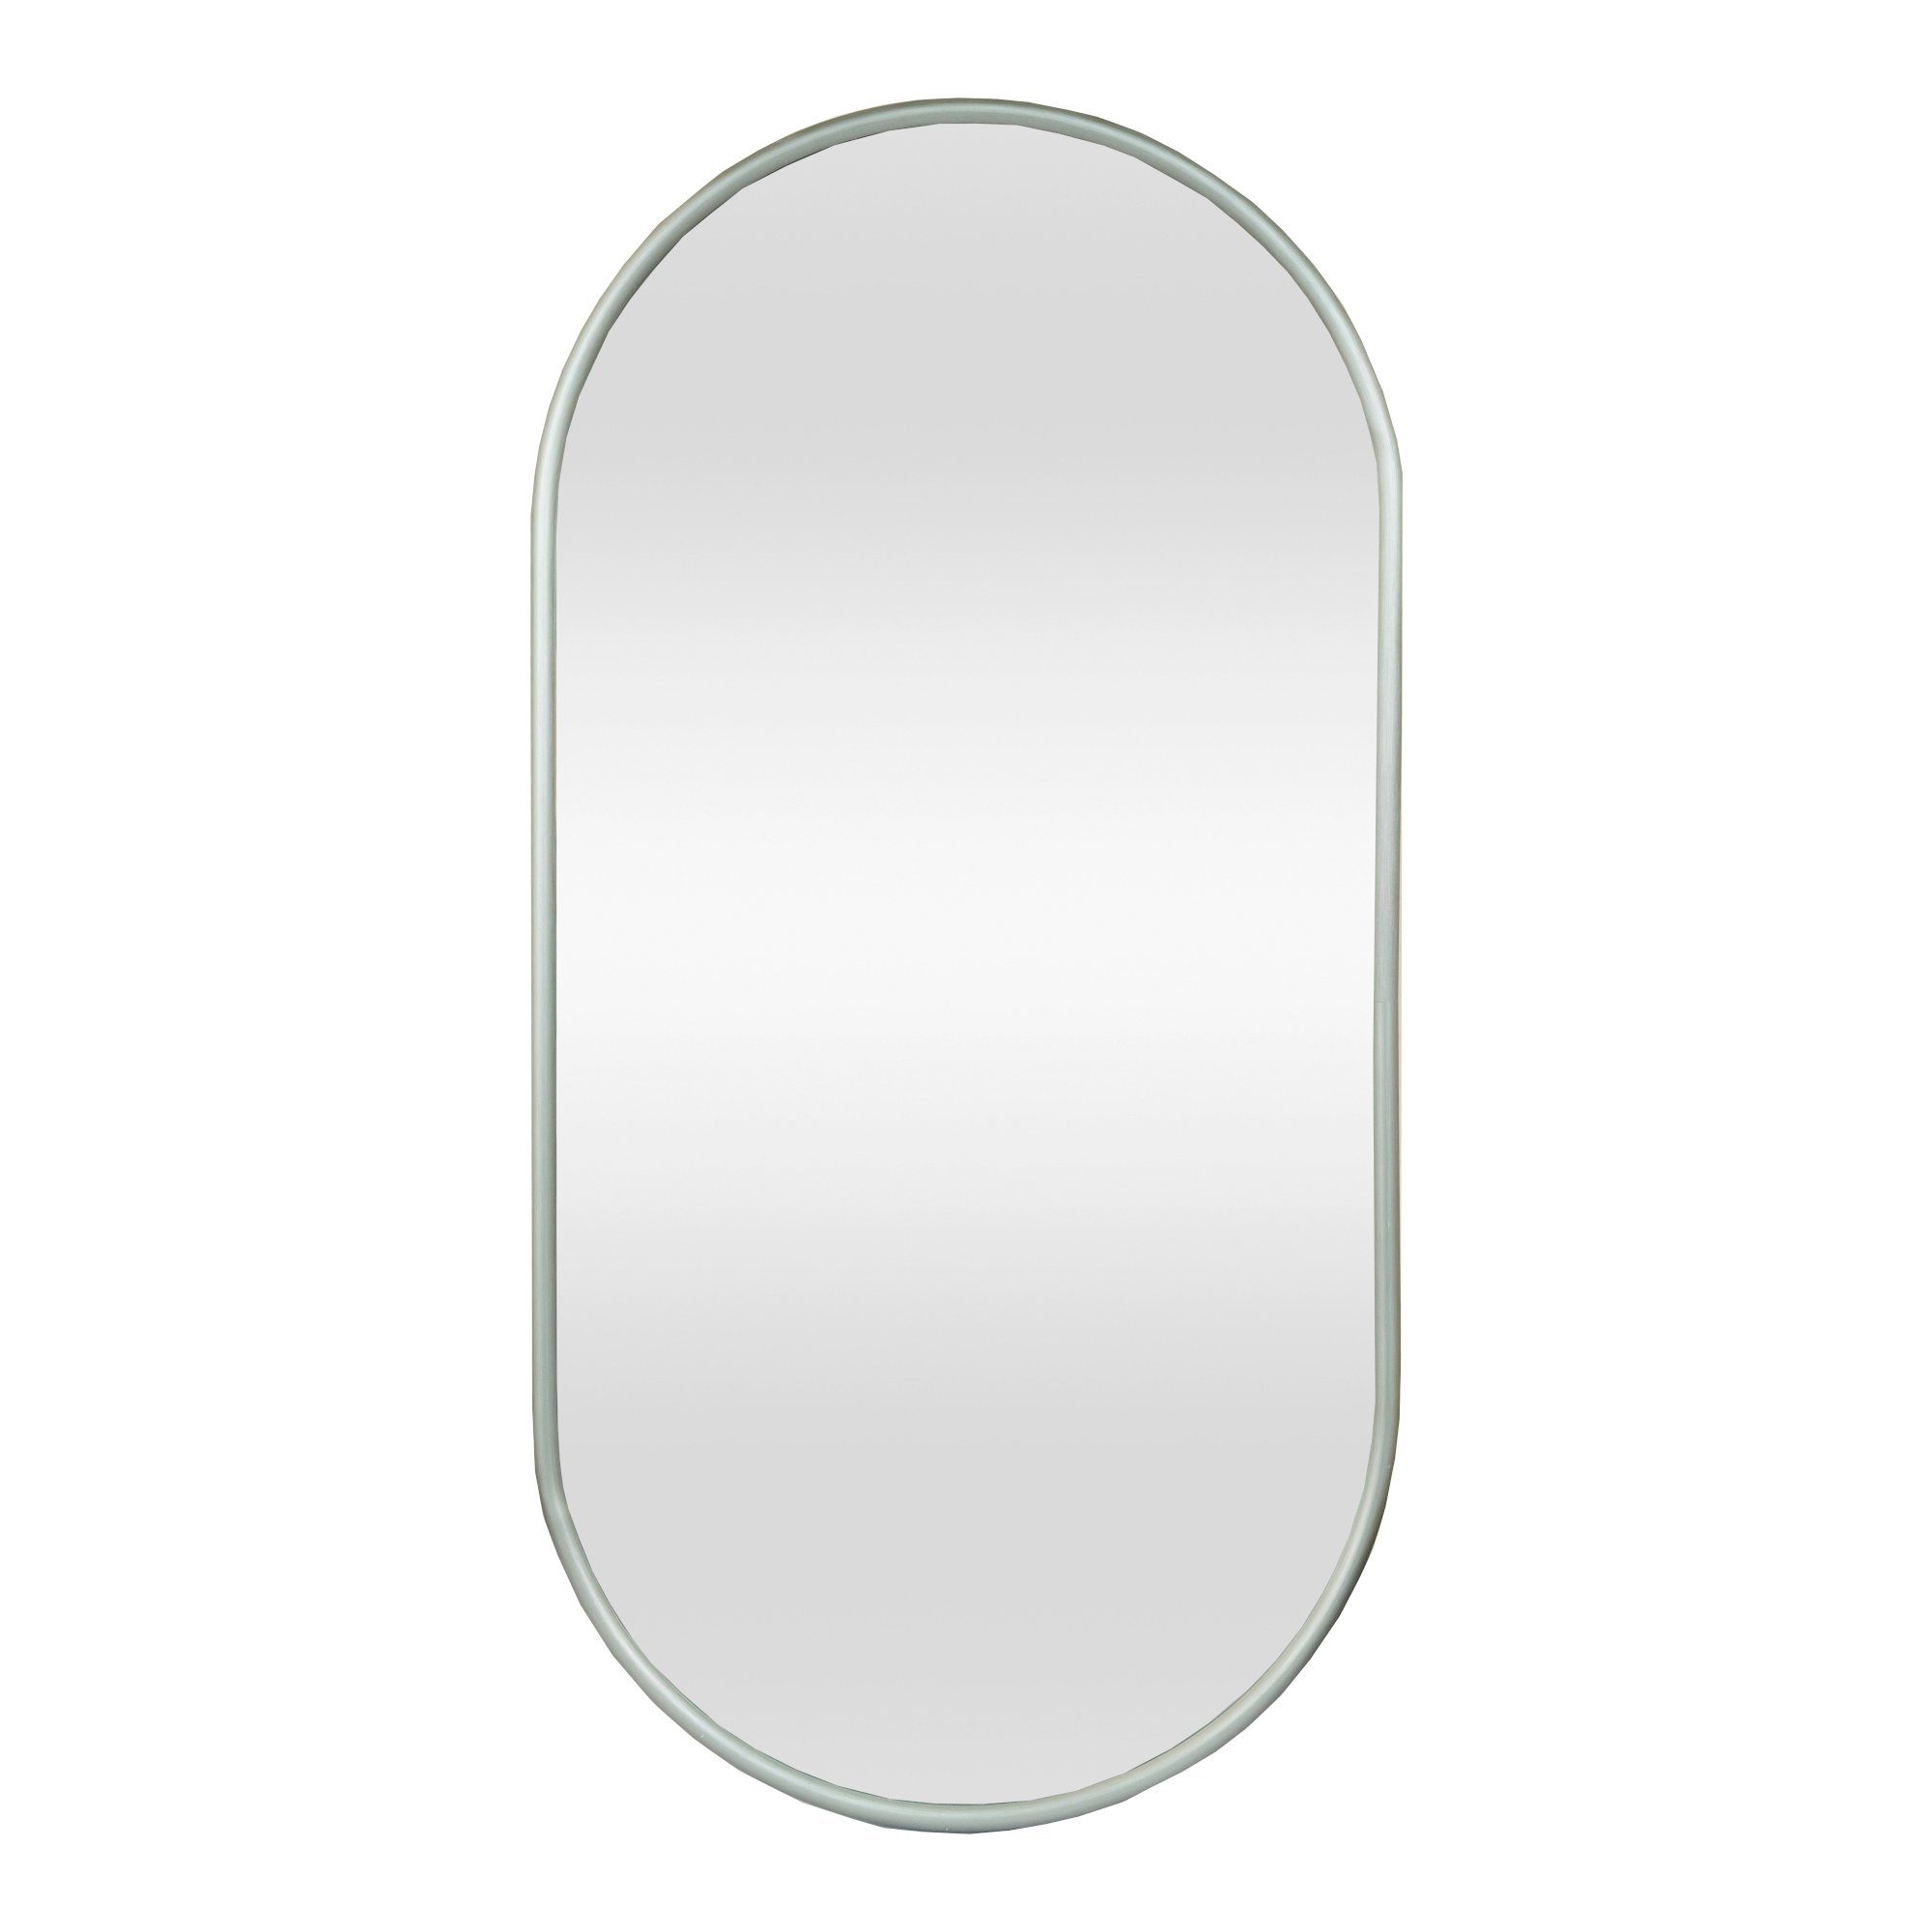 Spiegel oval | mit 30x60 »Picciano« Graphitgrau cm en.casa Aluminiumrahmen graphitgrau graphitgrau Wandspiegel,